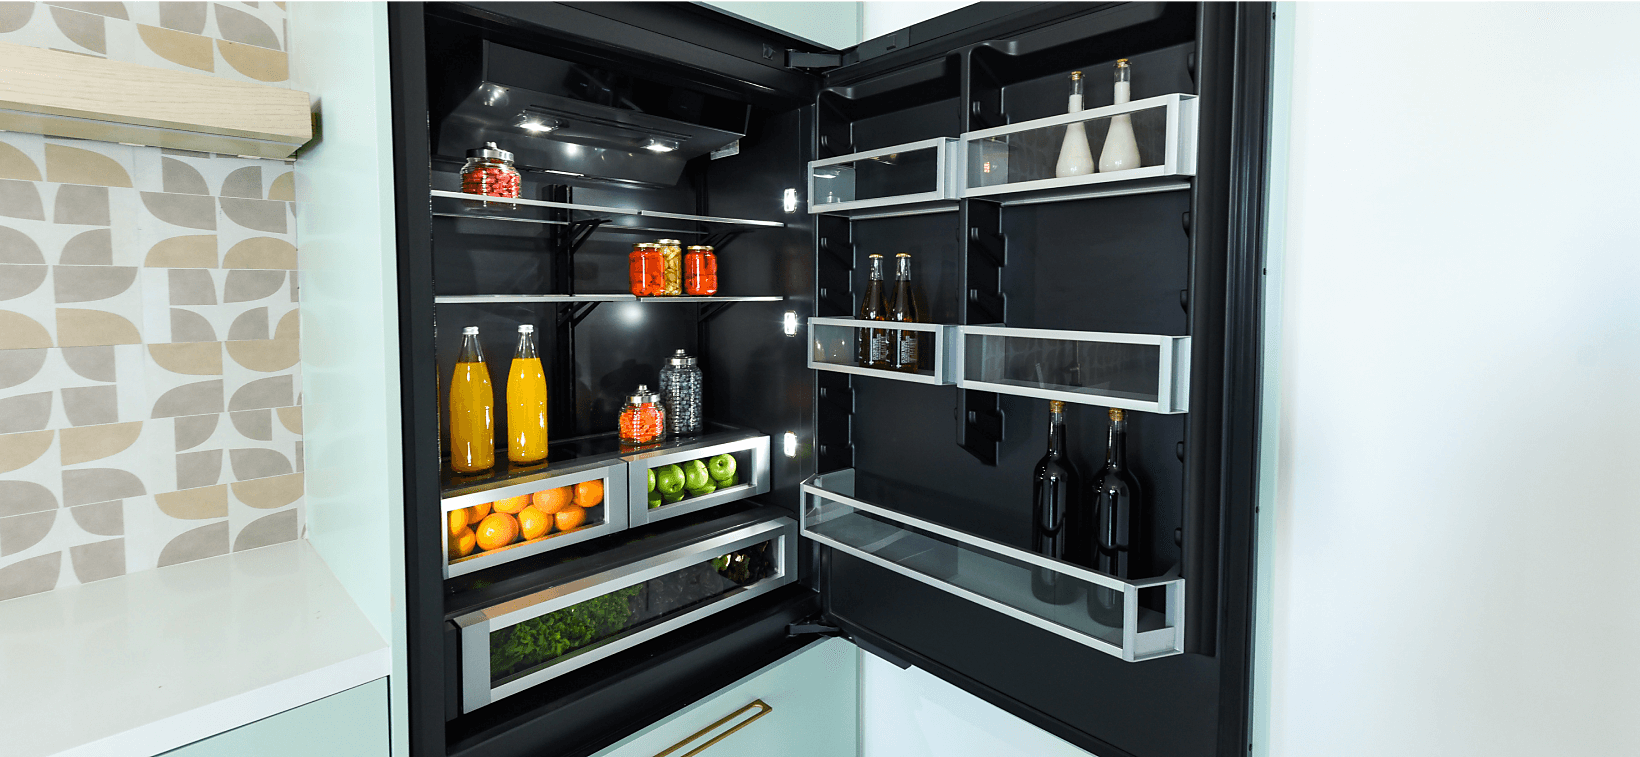 A JennAir Built-In Refrigerator in a modern, bright kitchen. 